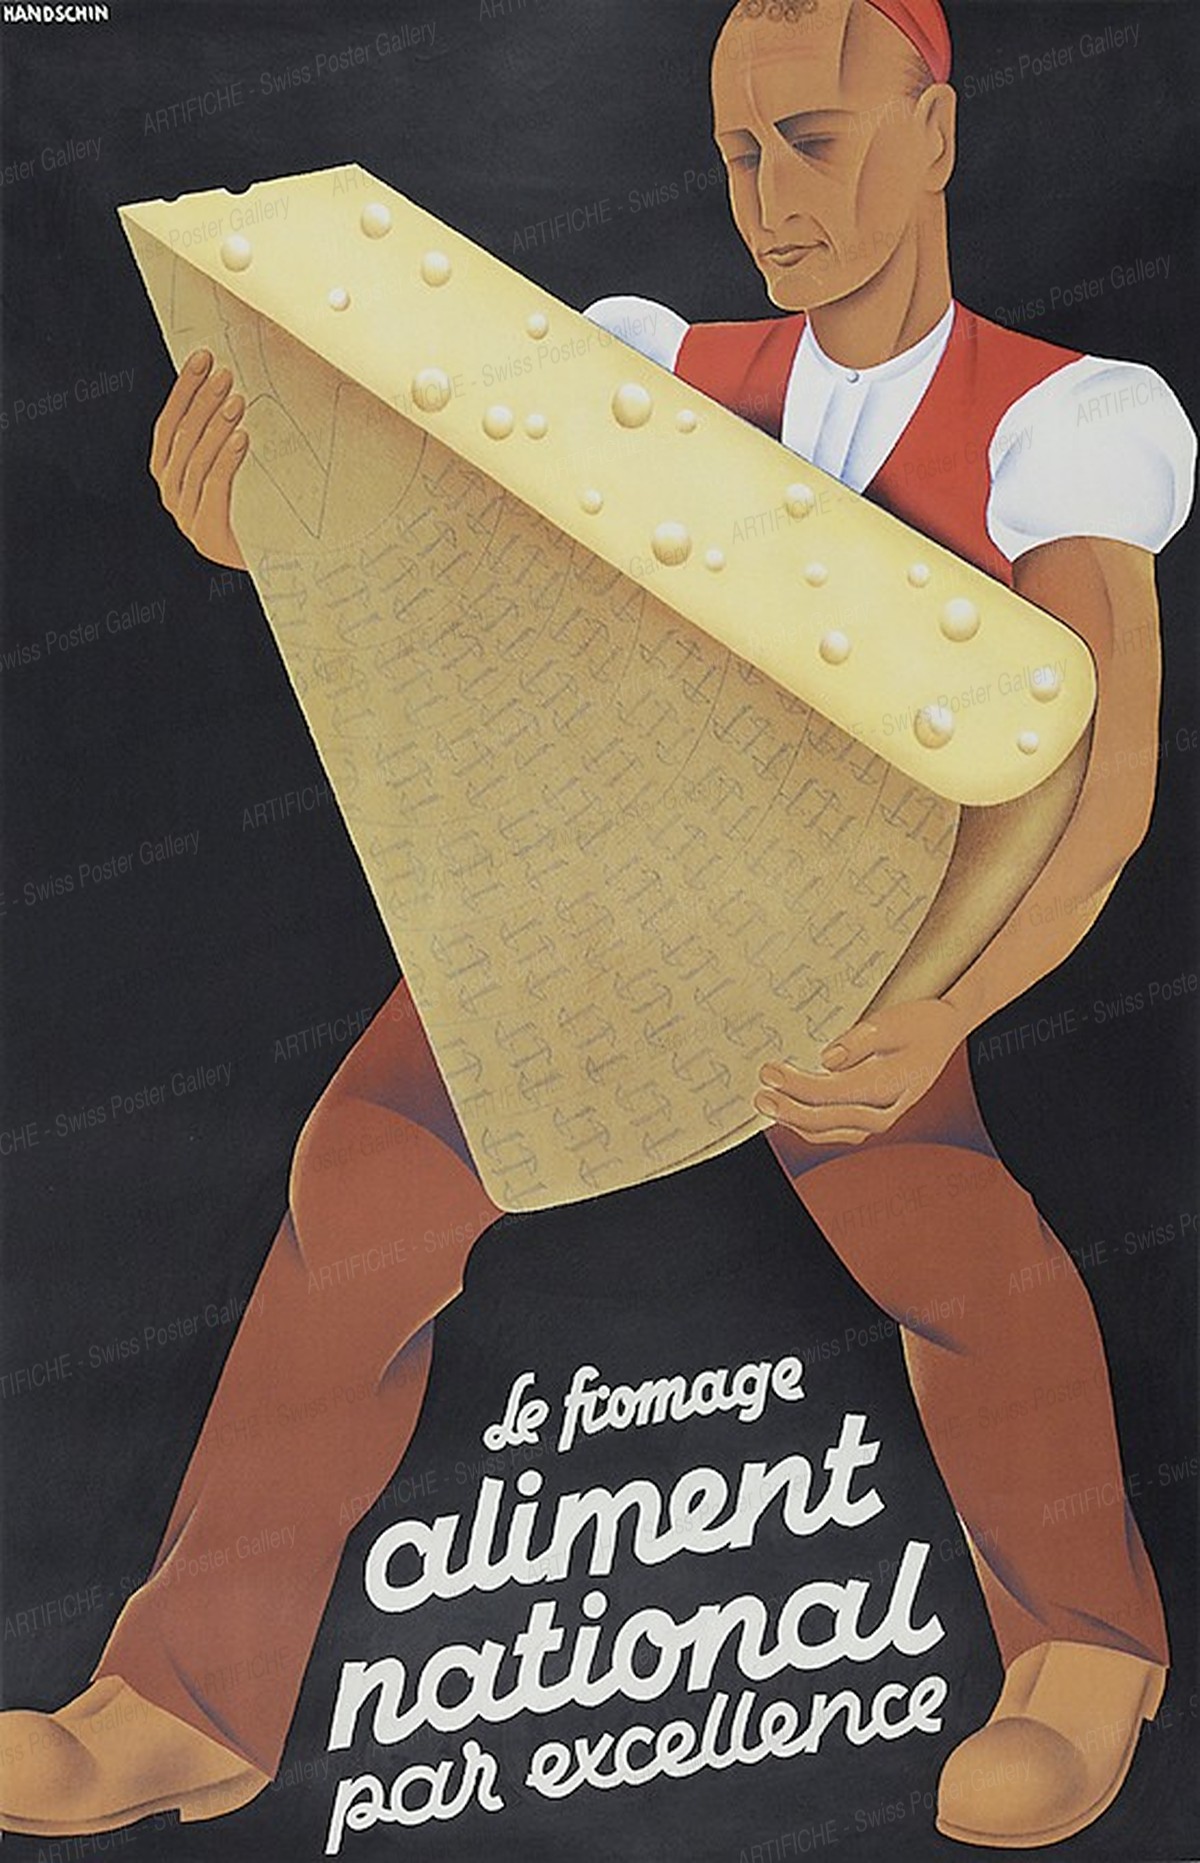 Cheese -the Swiss national dish, Johannes Handschin